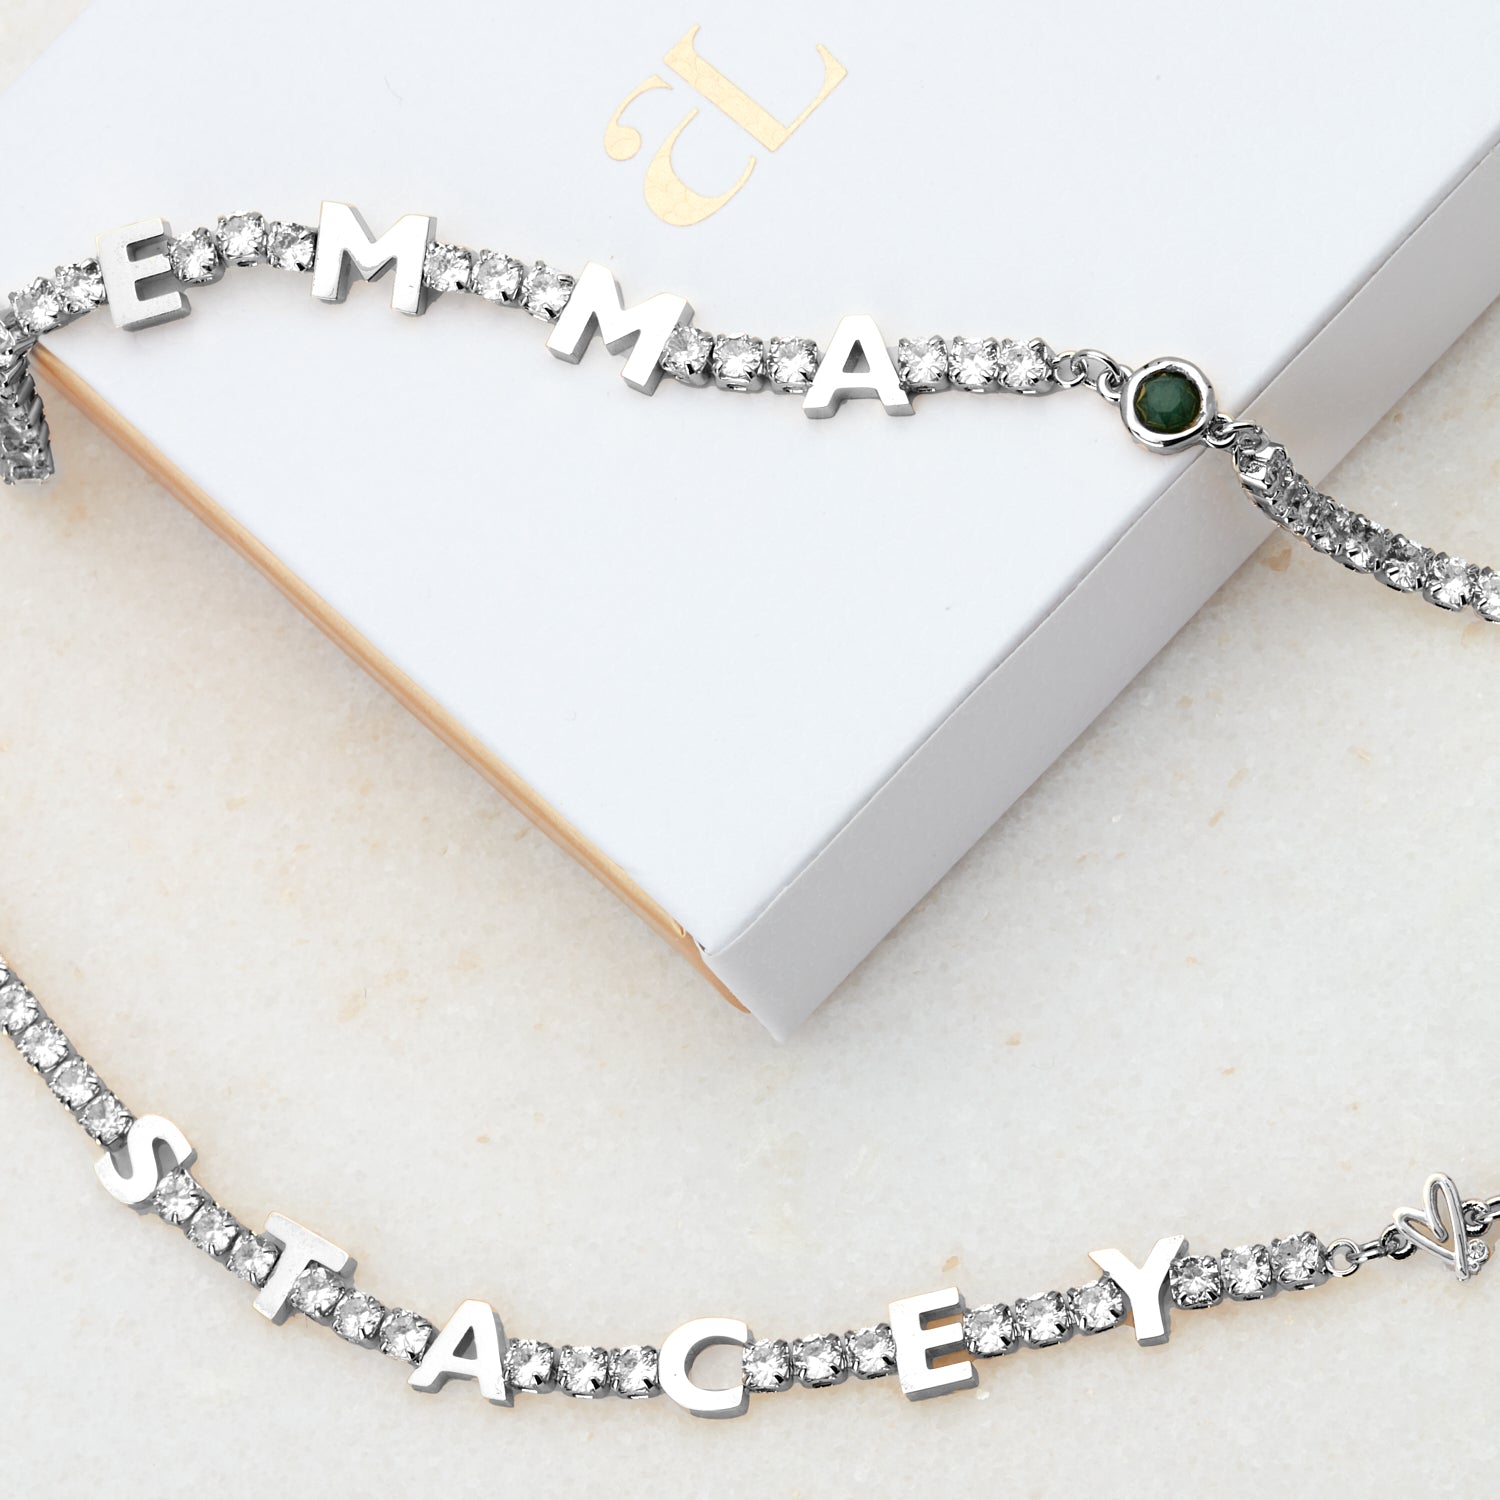 Antiquestreet Non-Precious Metal & Brass Bracelet for Girls (Gold) :  Amazon.in: Jewellery